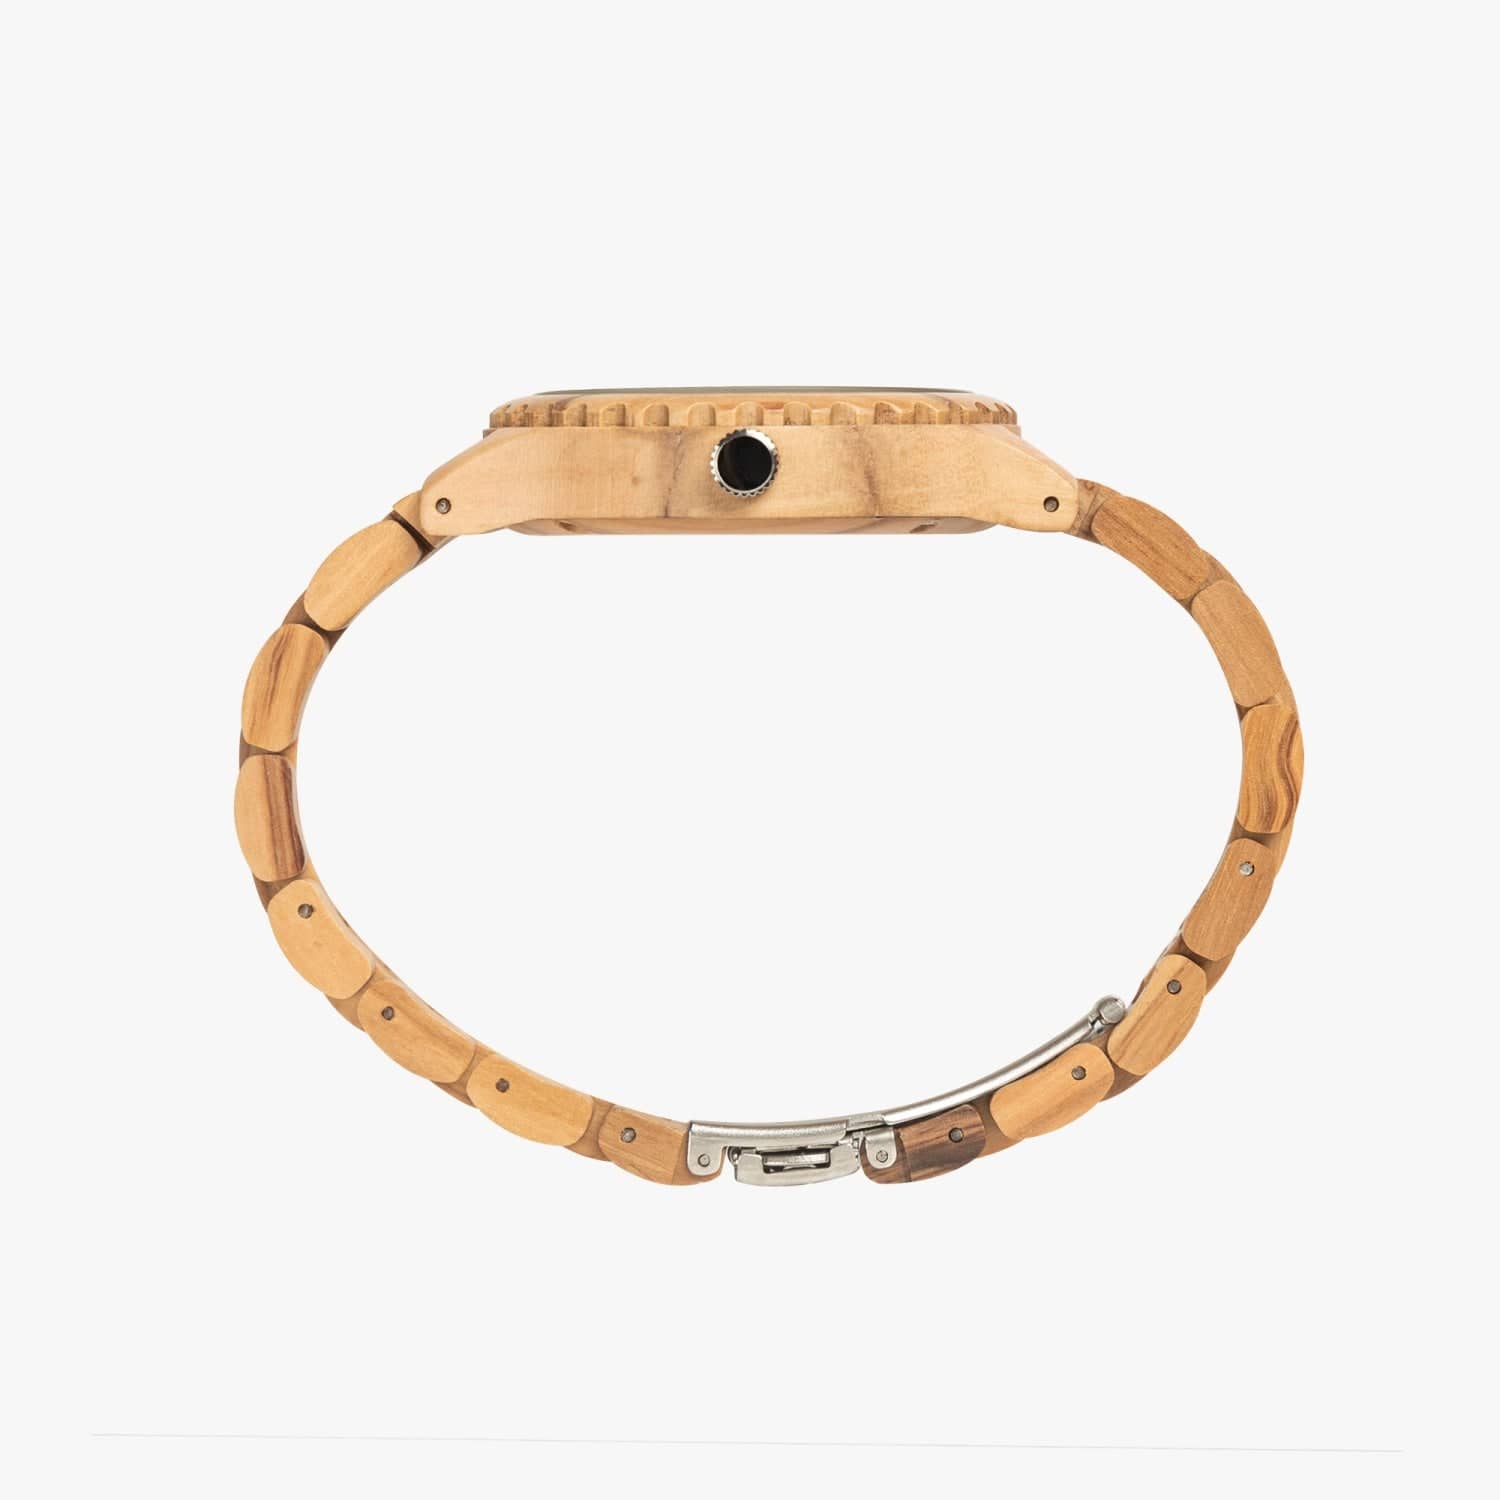 White lotus. Olive Lumber Wooden Watch, designed by Sensus Studio Design